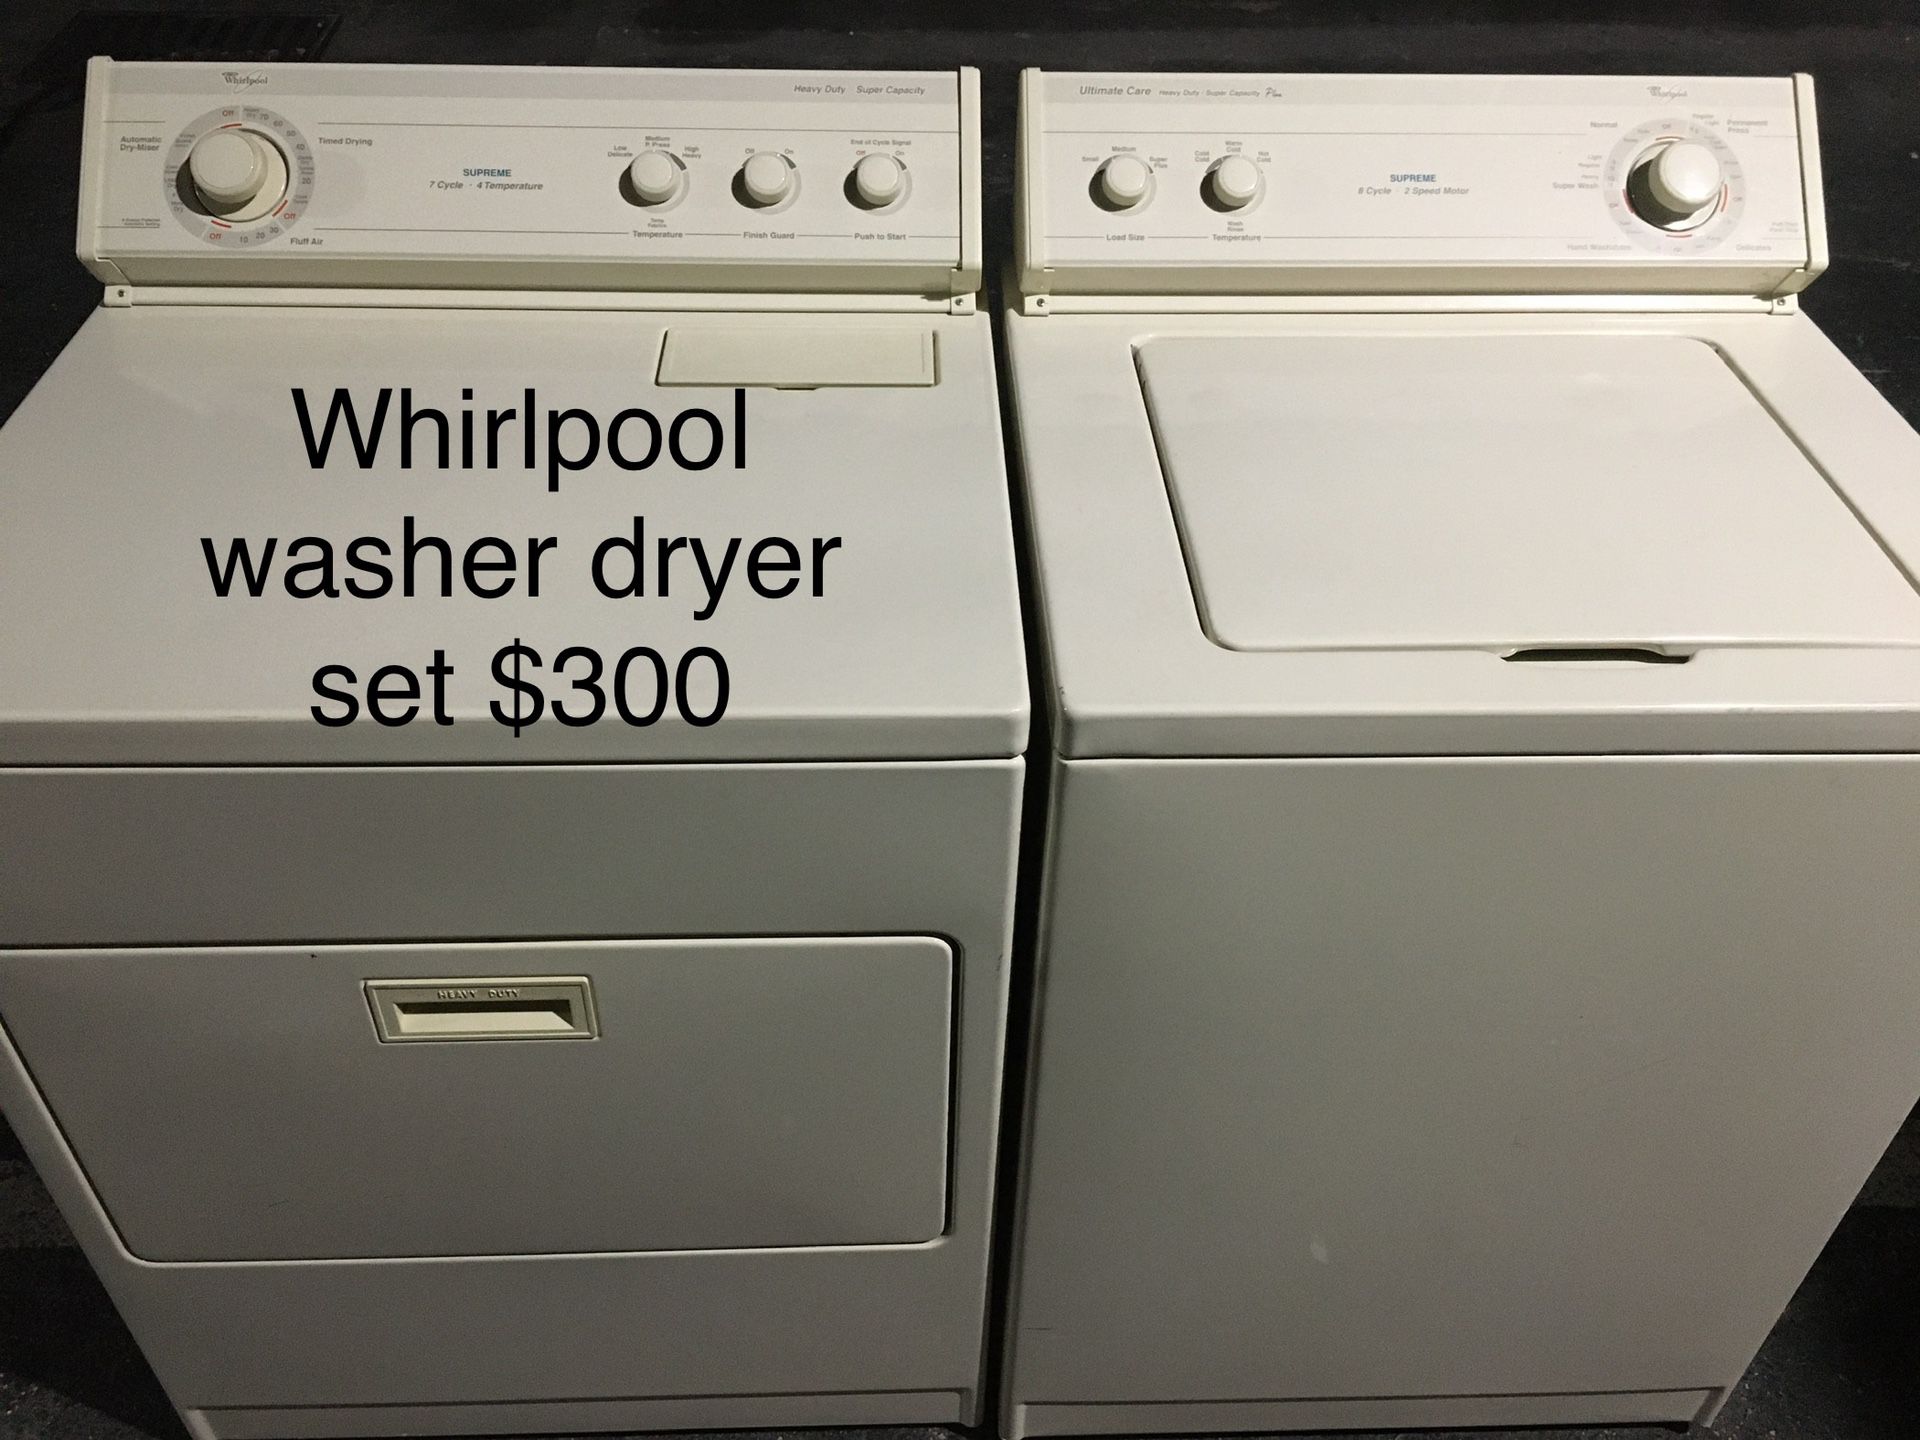 Whirlpool washer dryer set / lavadora secadora